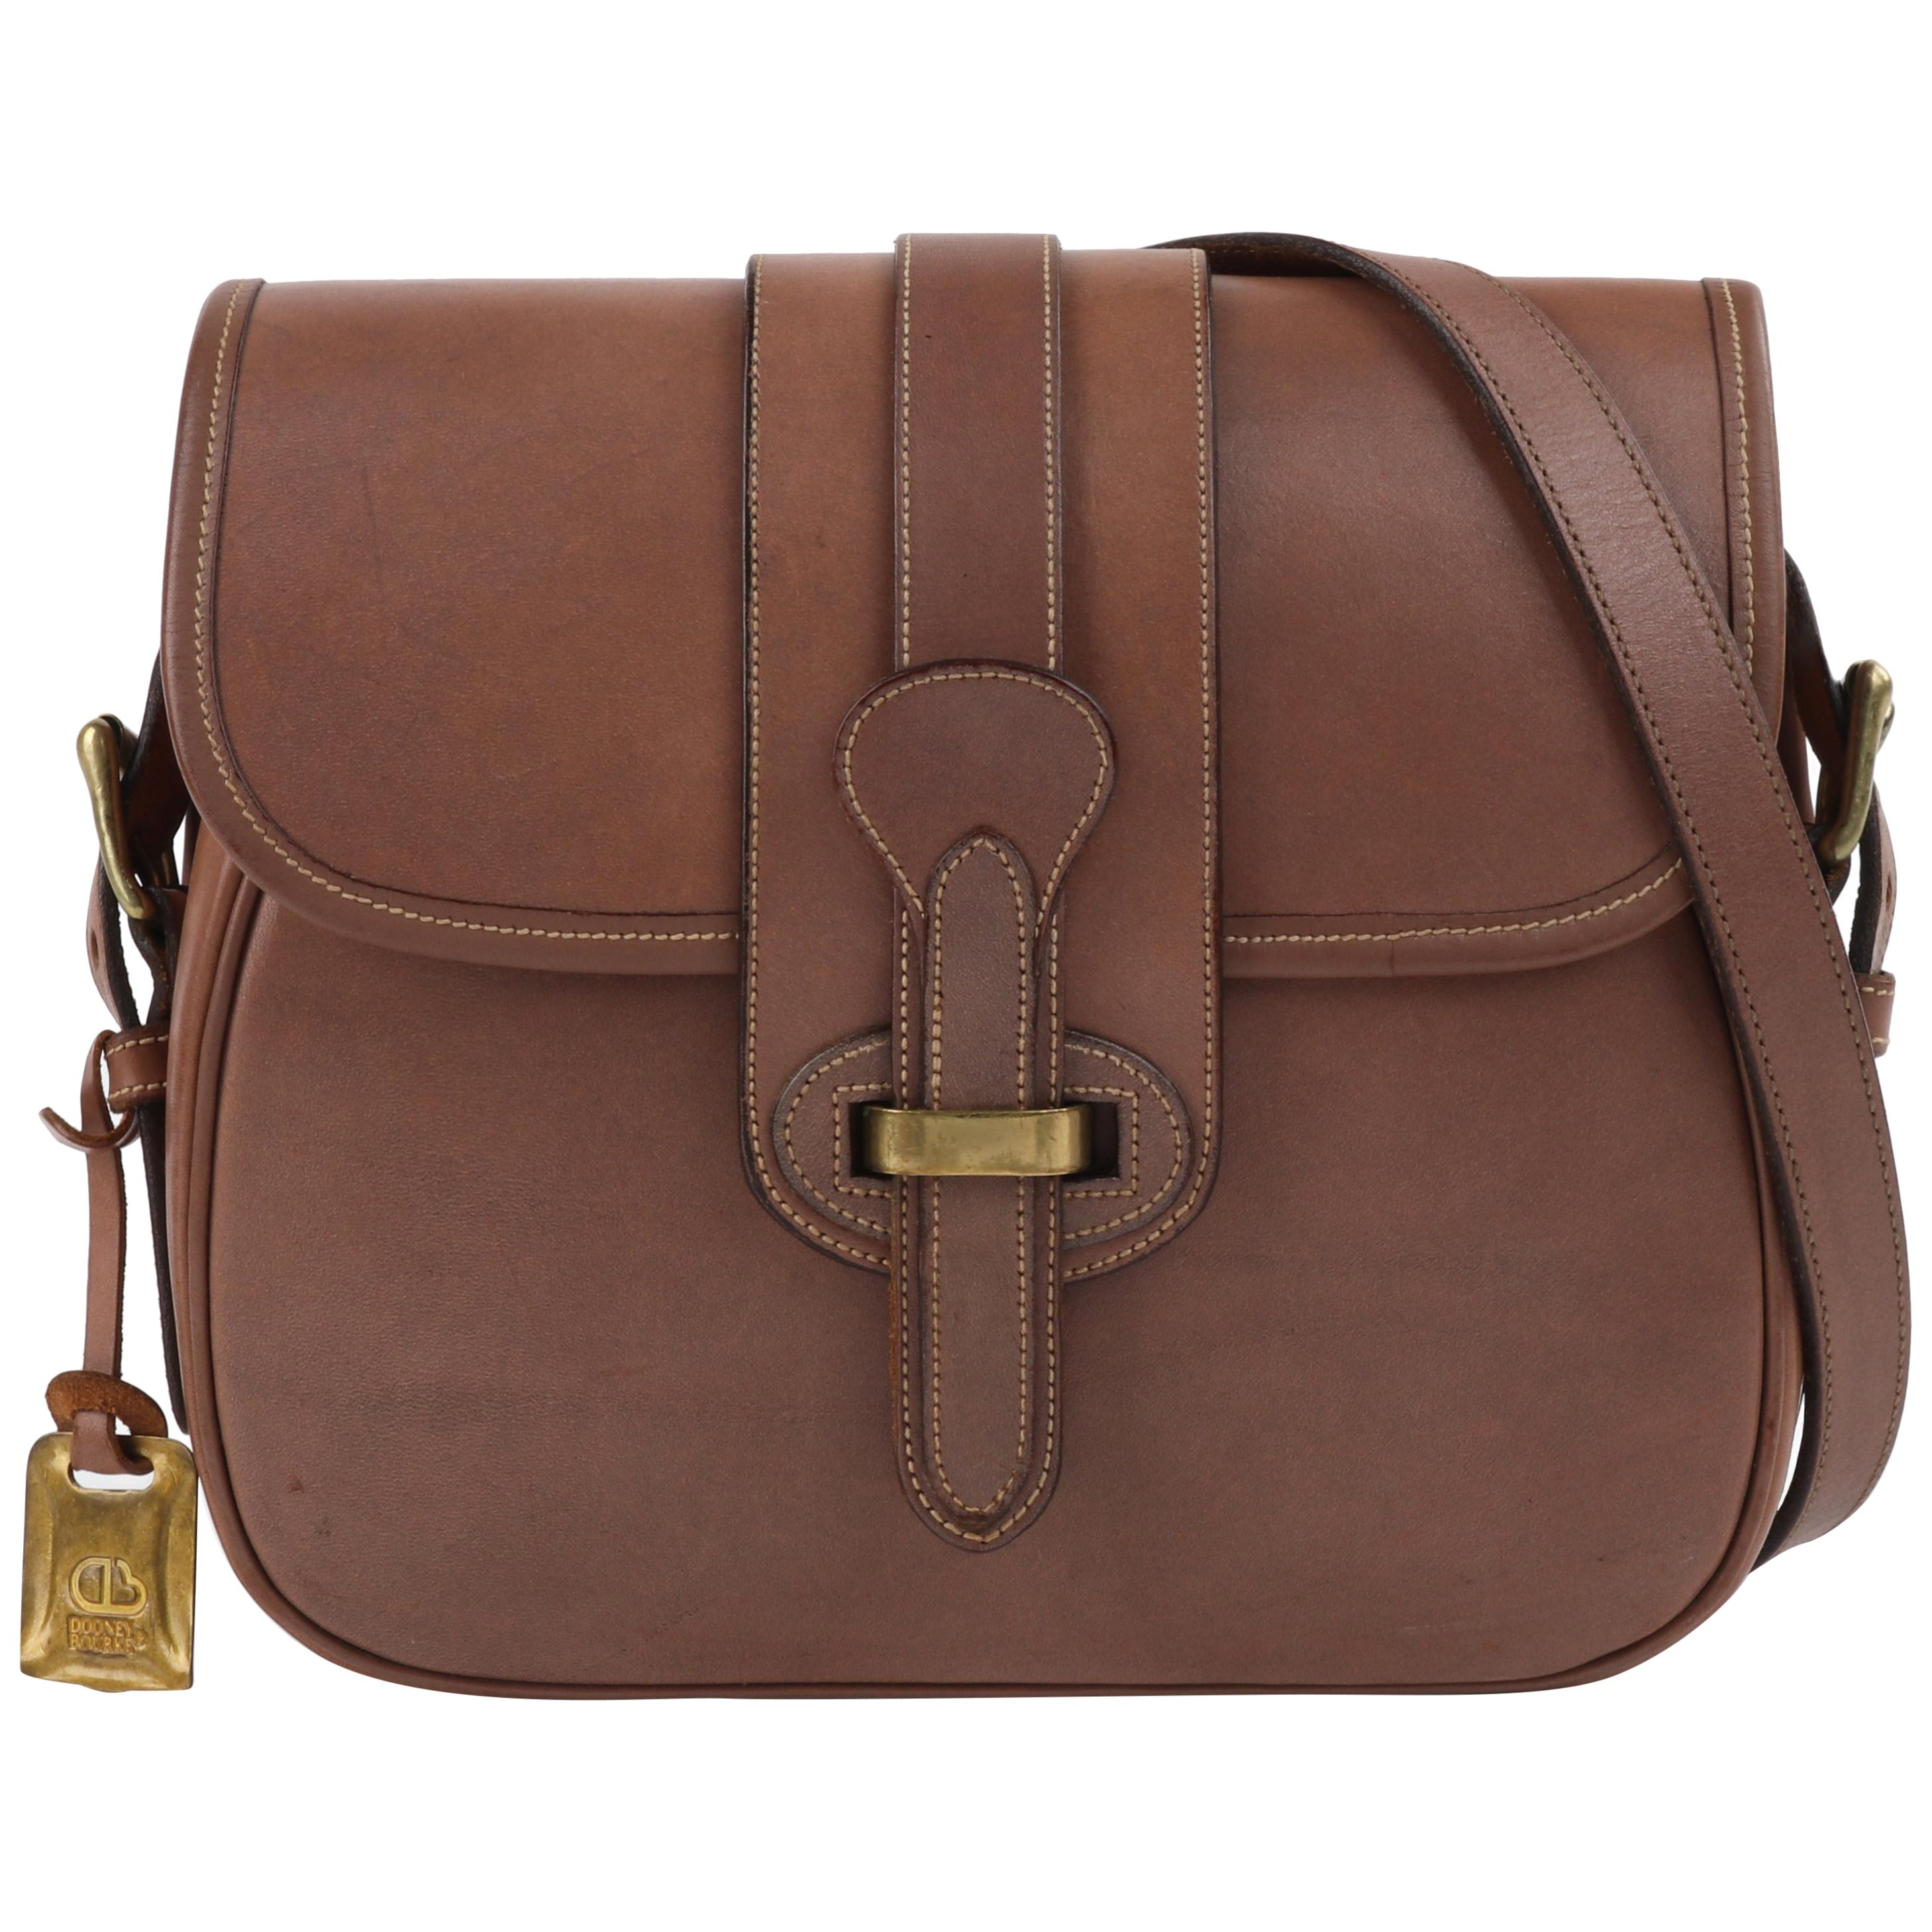 Dooney & Bourke | Bags | Dooney Bourke Vintage Pebbled Leather Hobo  Shoulder Bag Dark Brown | Poshmark